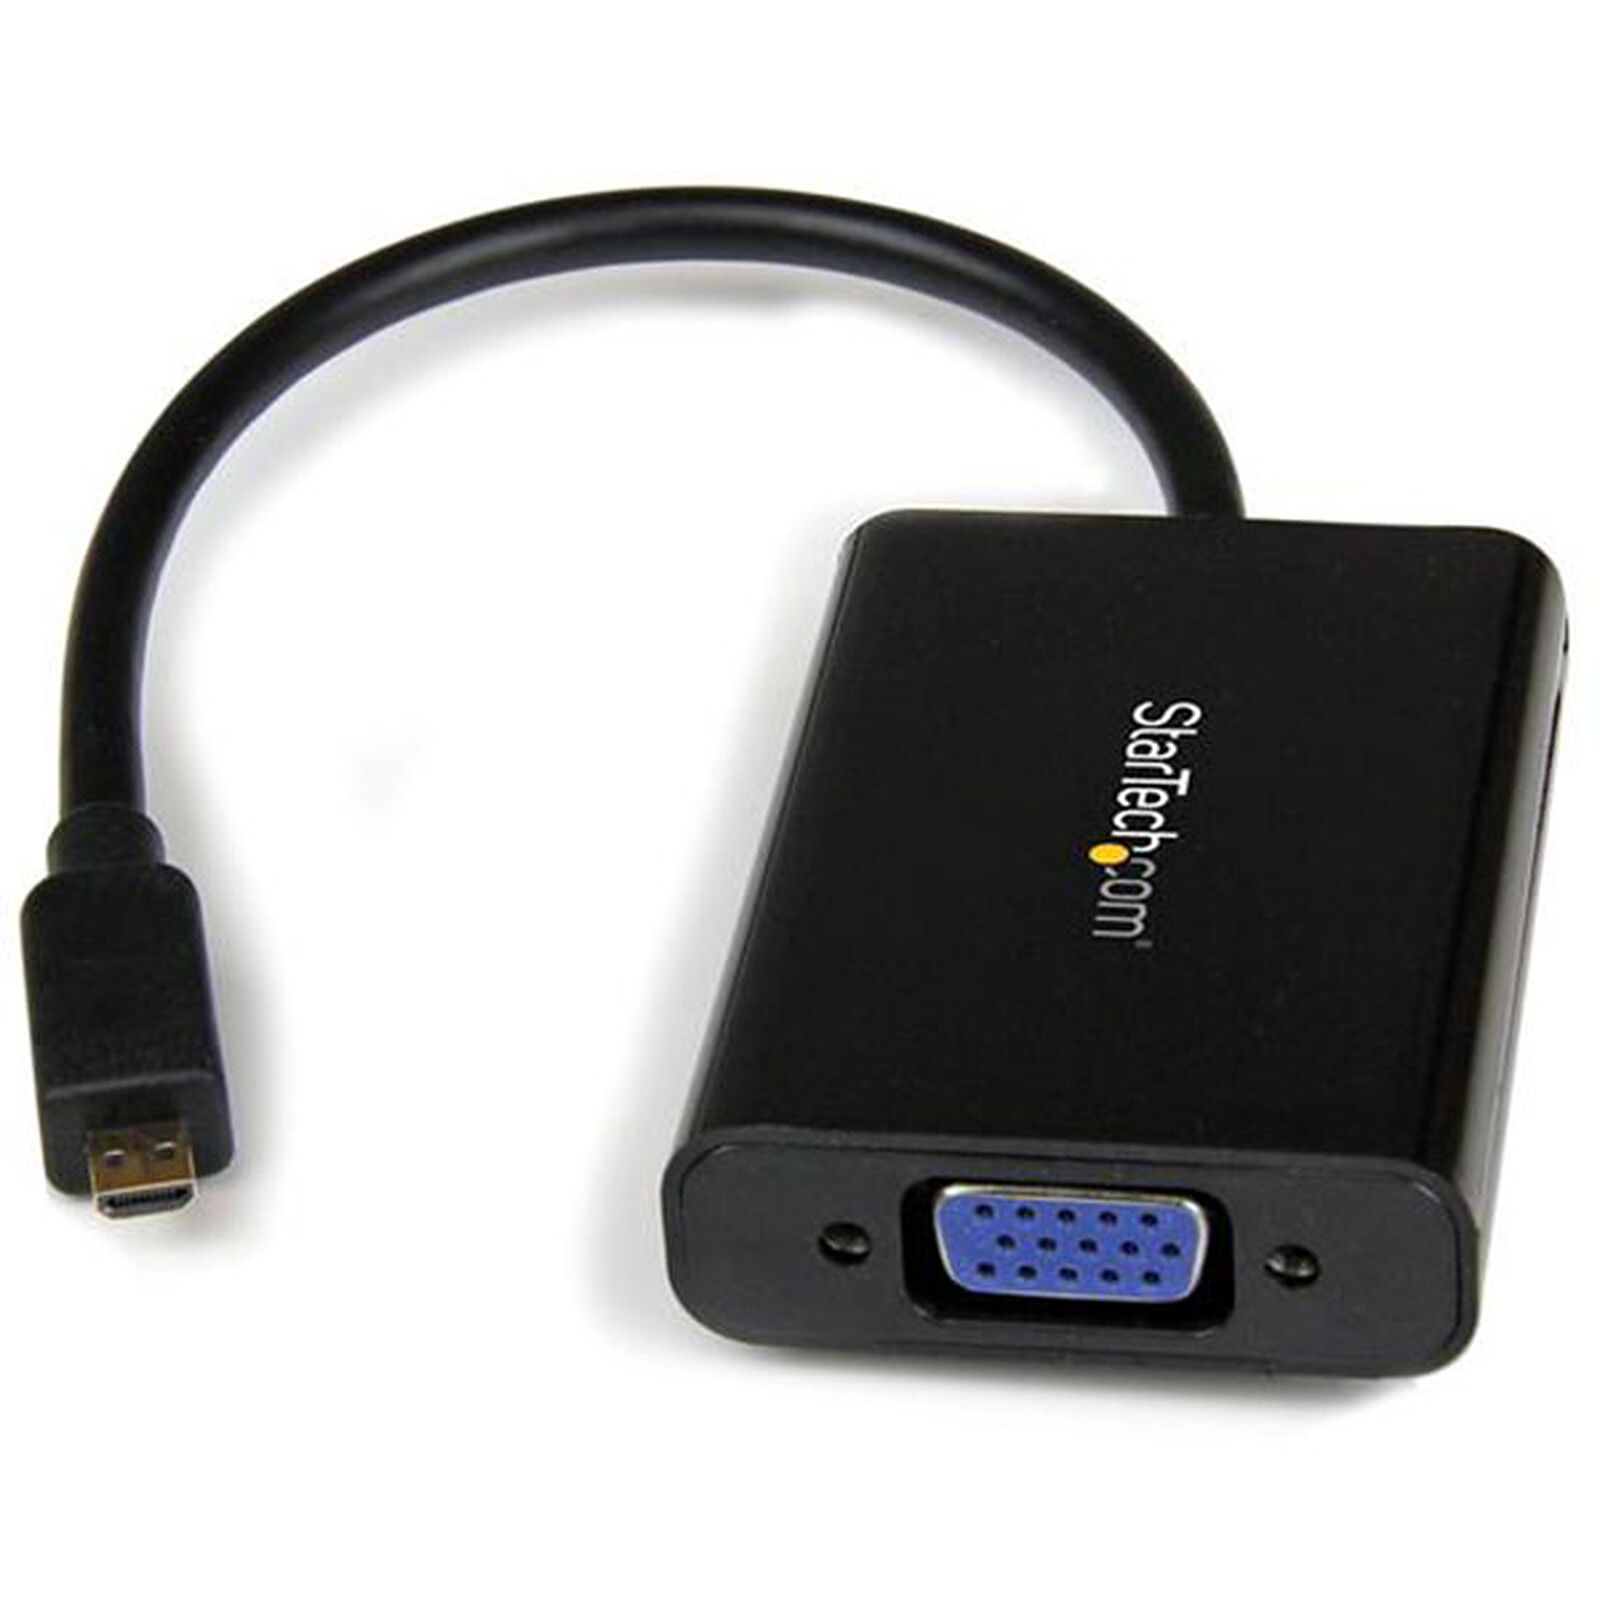 Adaptateur mini HDMI vers VGA